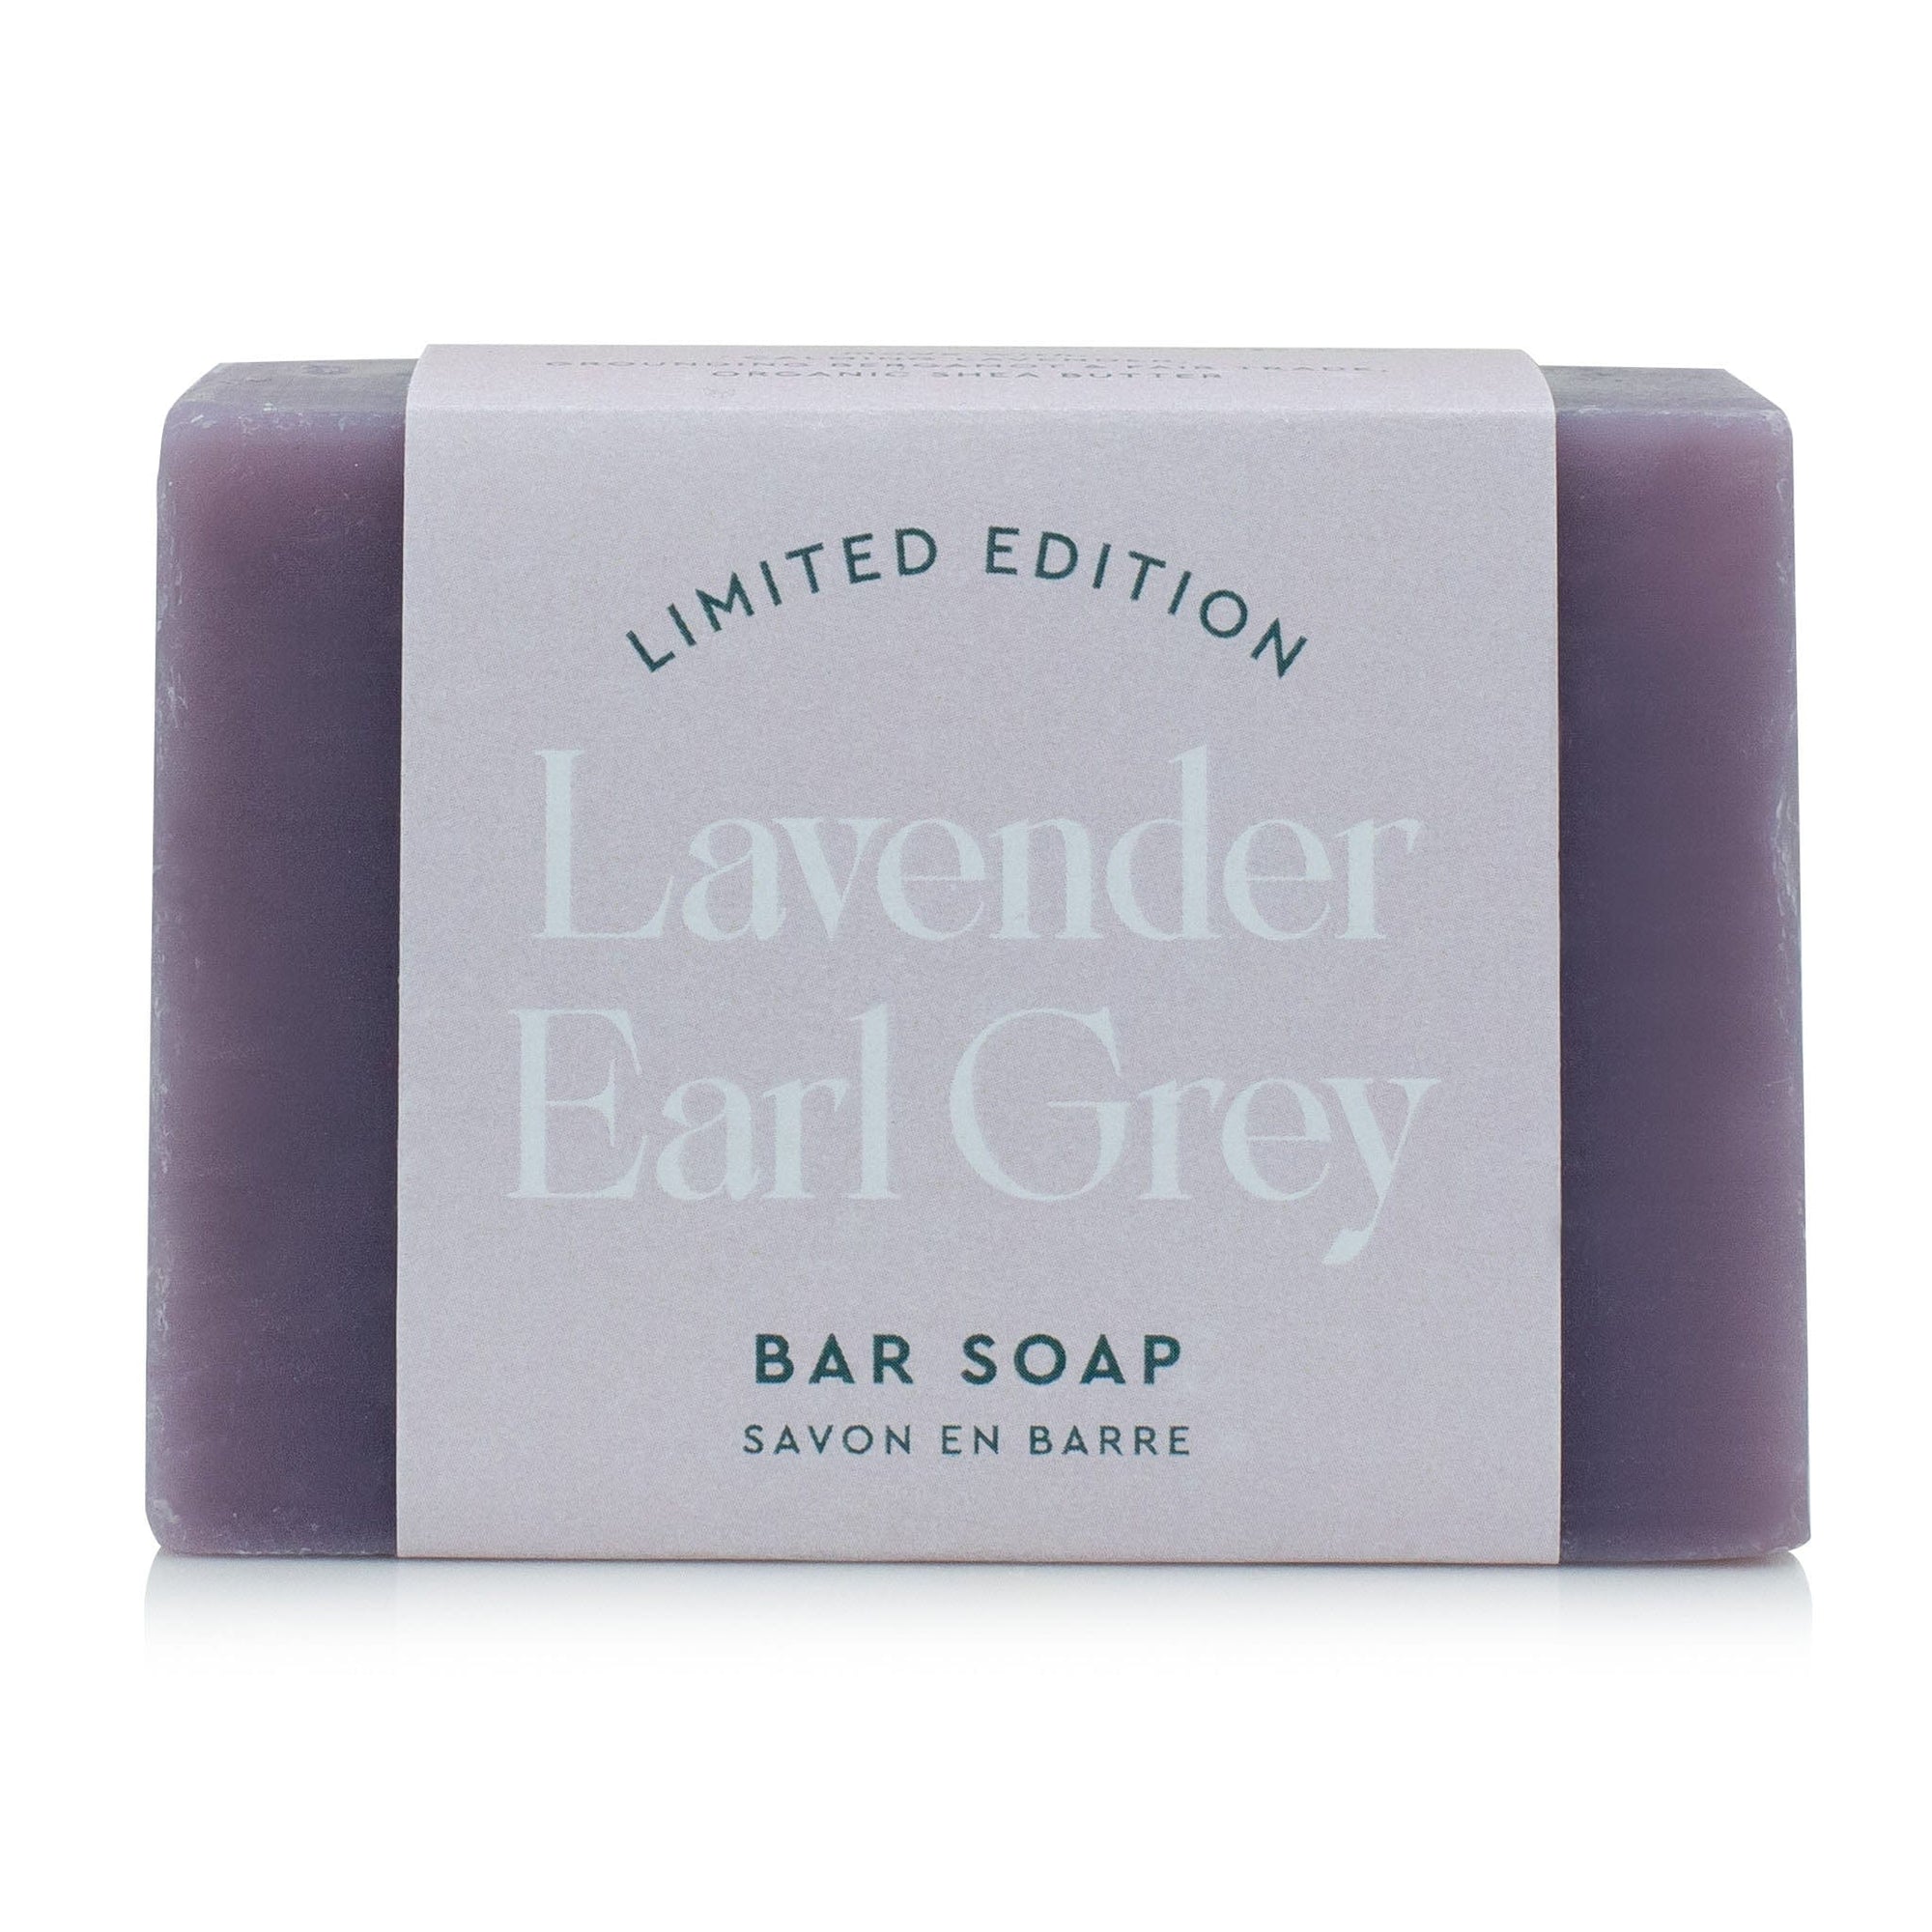 Lavender Earl Grey Soap